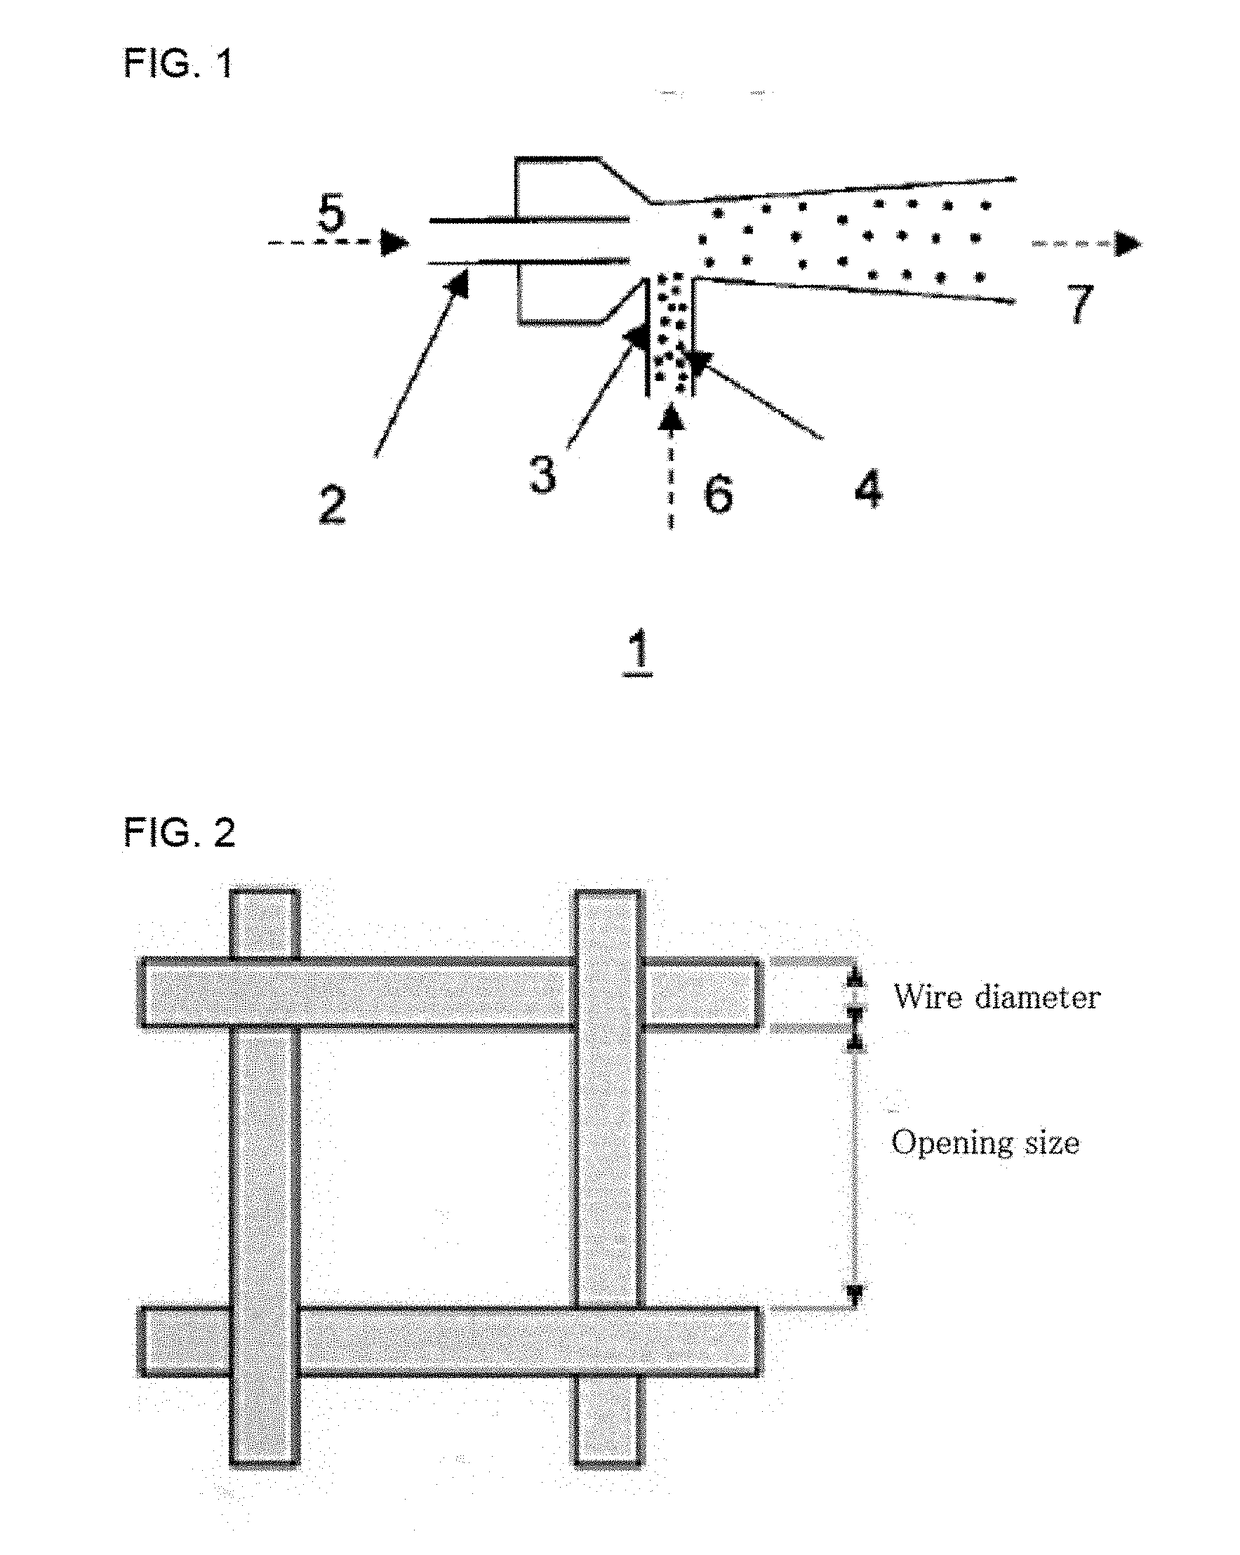 Method for producing toner for developing electrostatic images